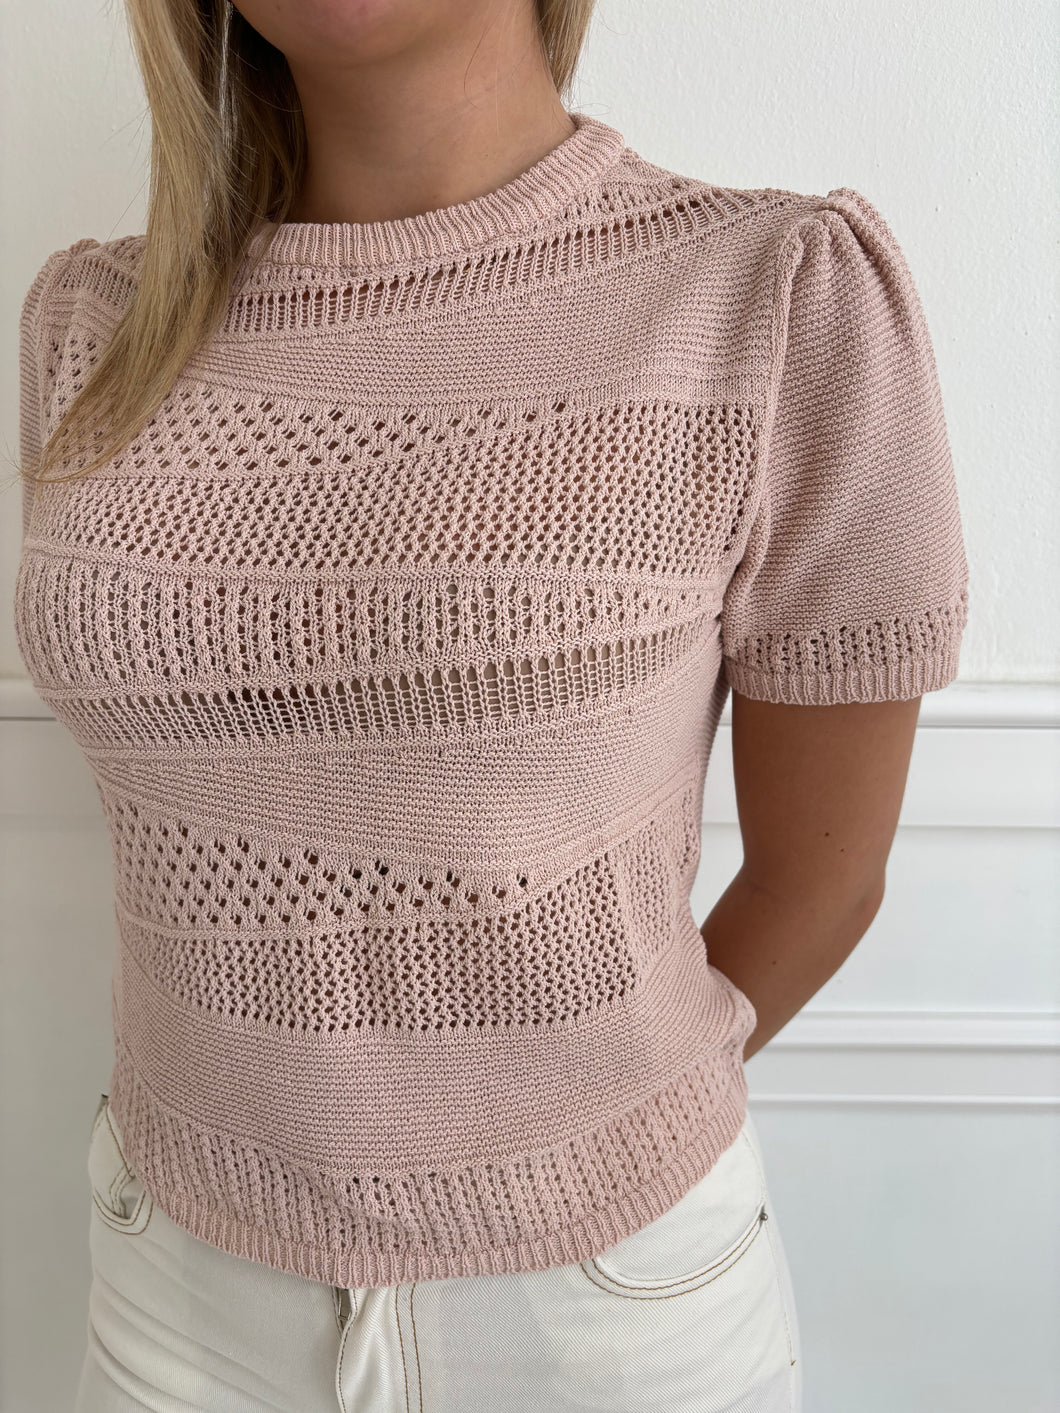 Haveone - T-shirt crochet